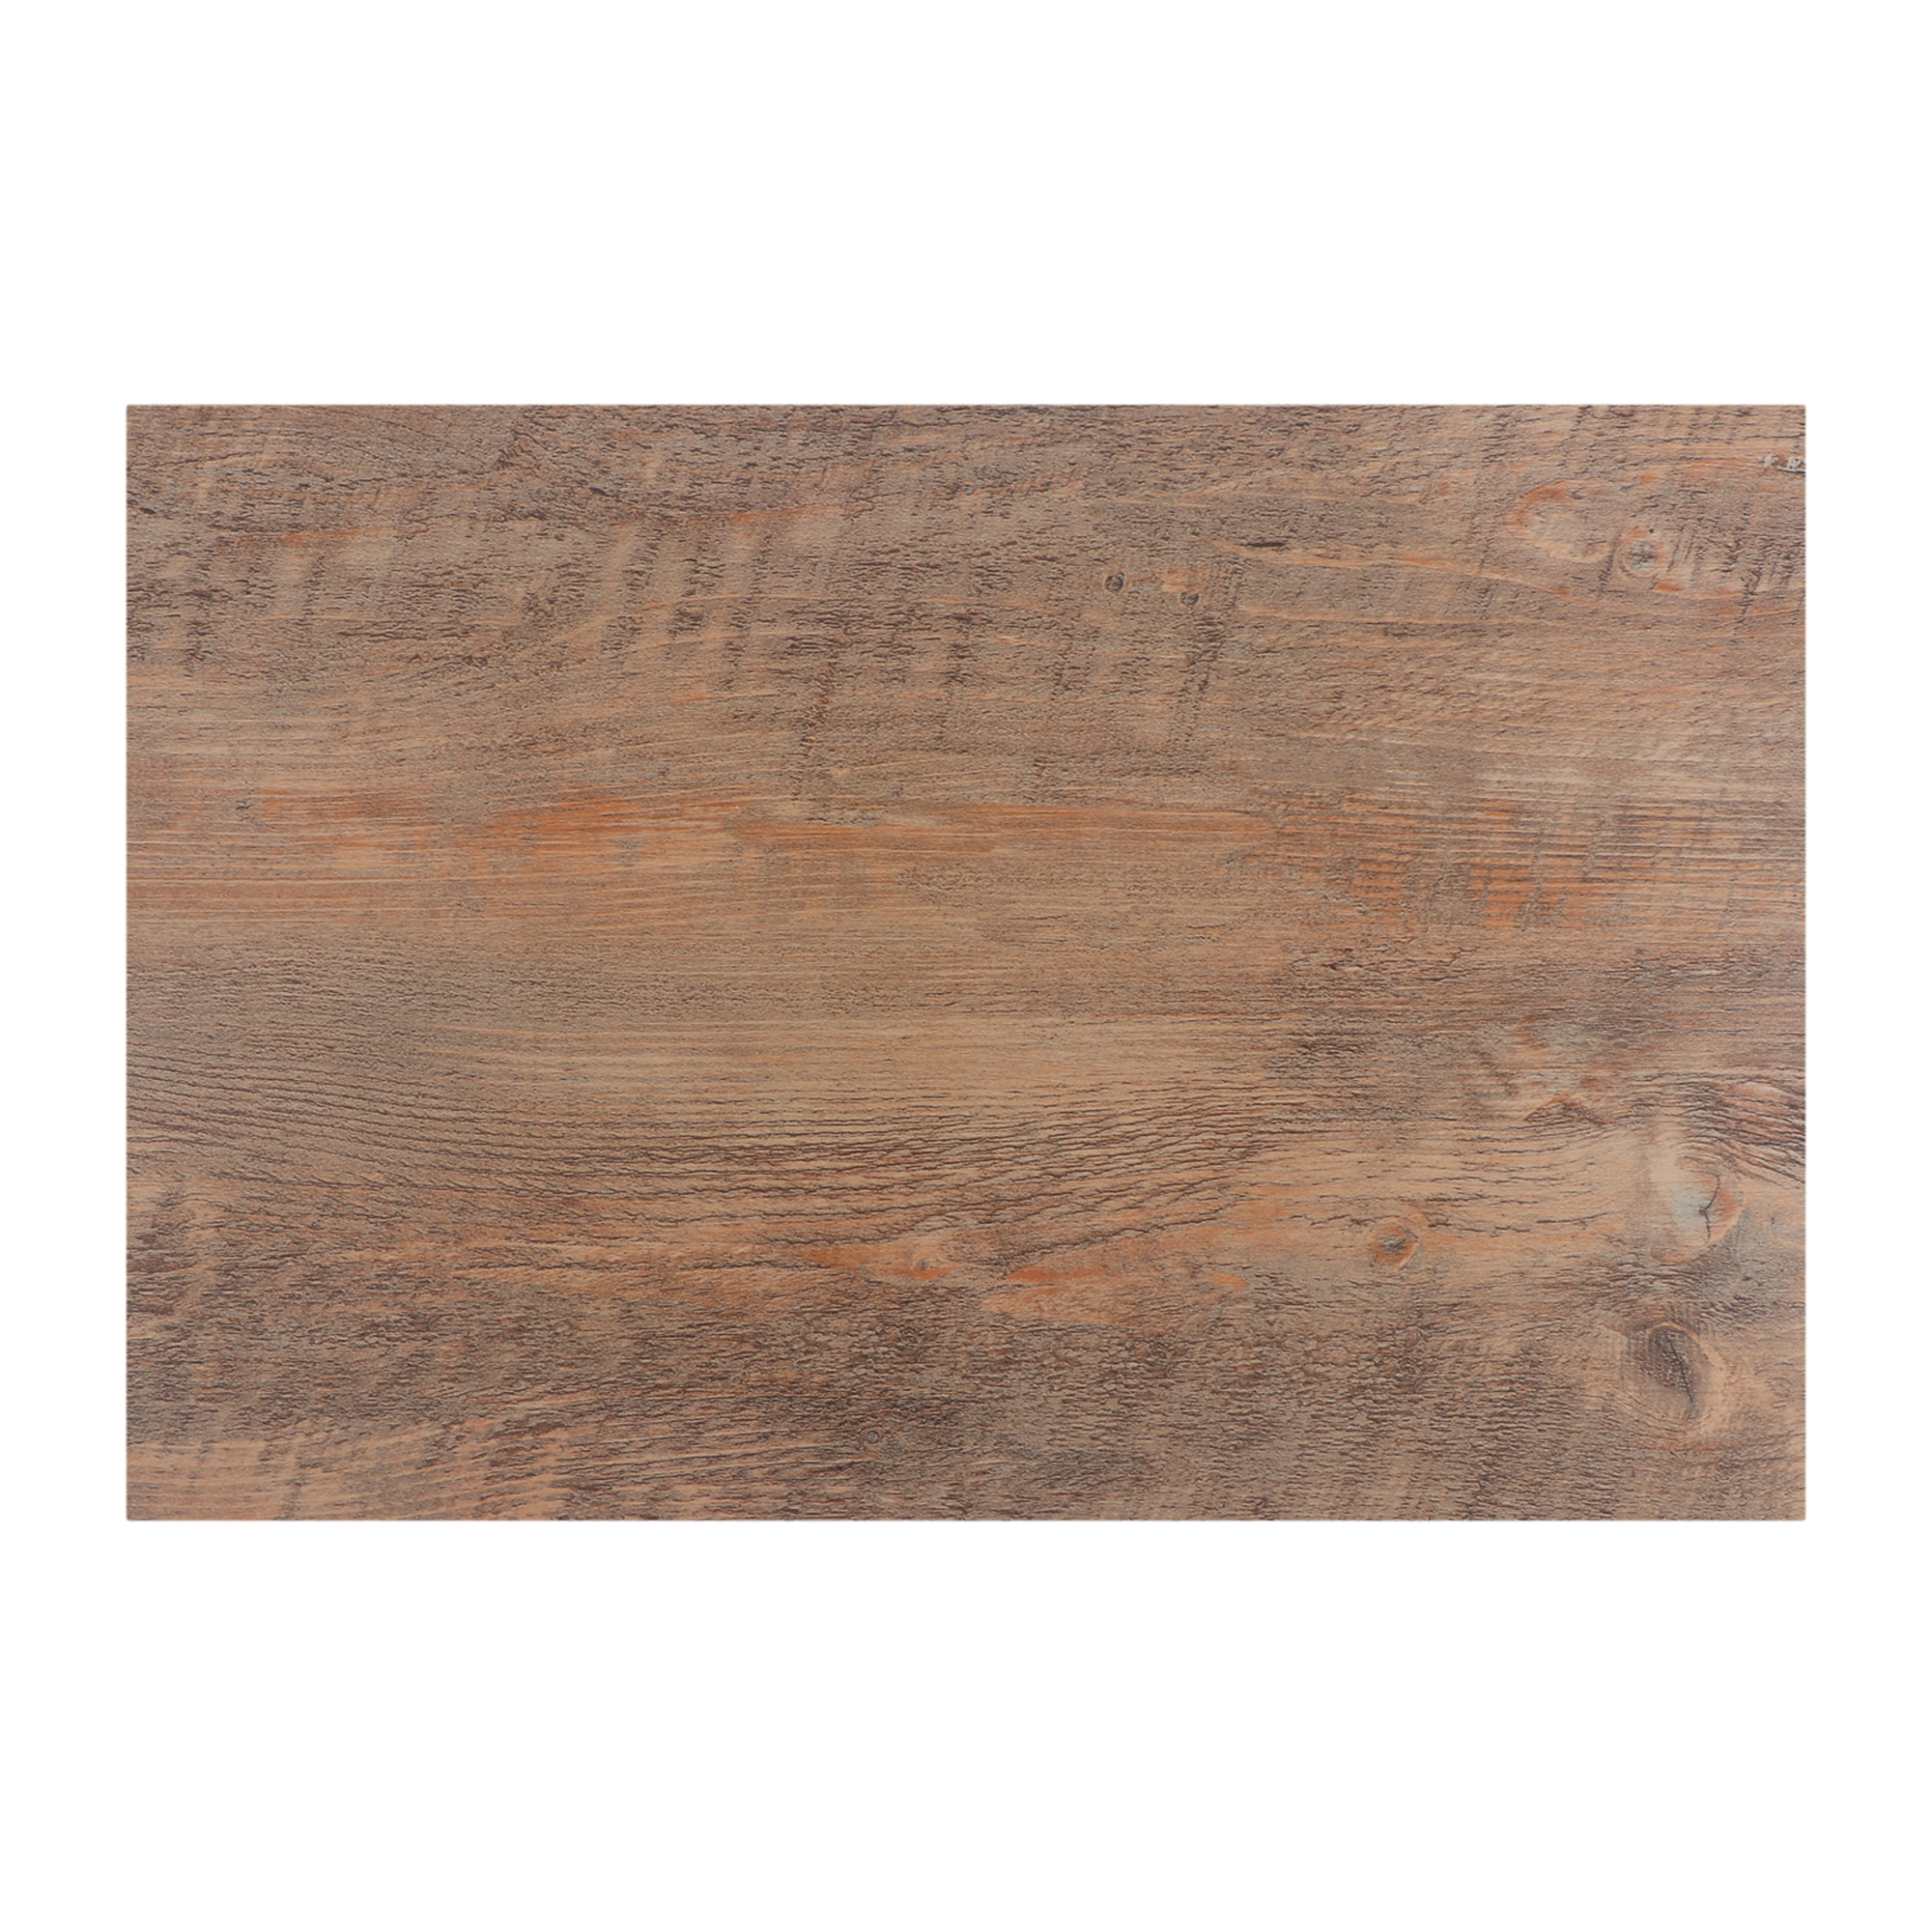 Салфетка под посуду коричневая Asa selection 46 x 33 cm